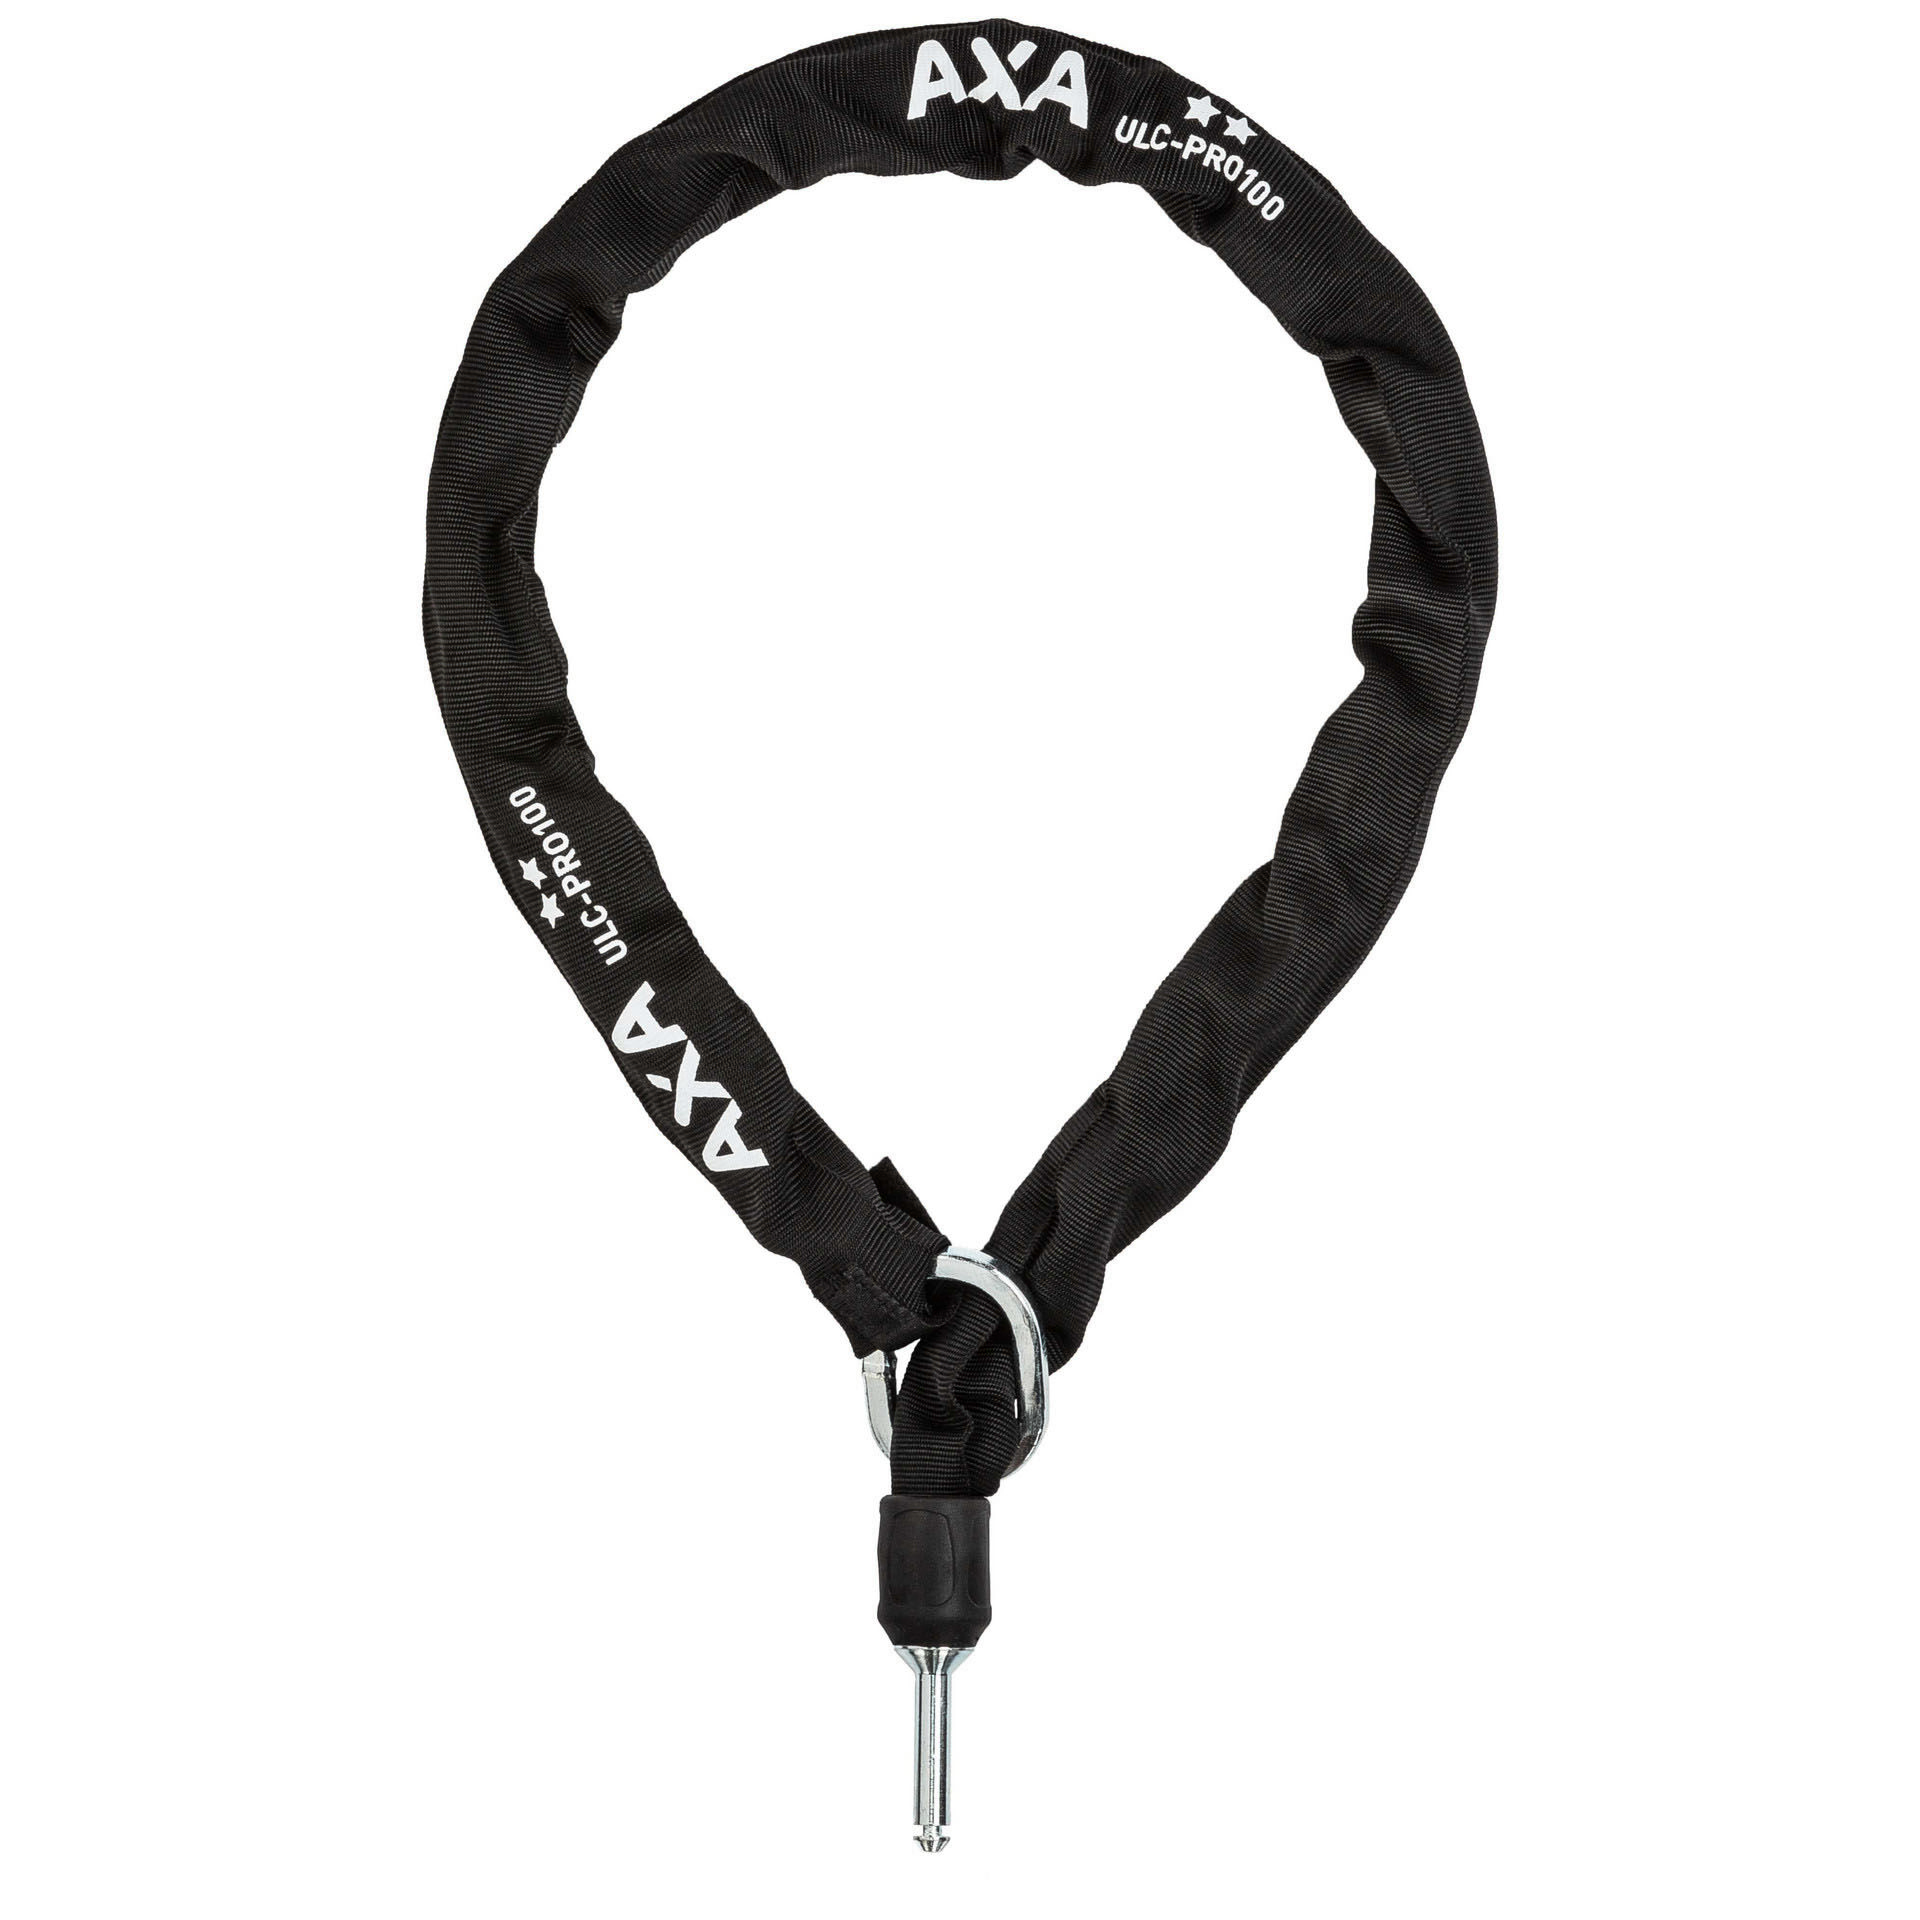 AXA Anschließkette ULC Pro100 Fahrrad schwarz